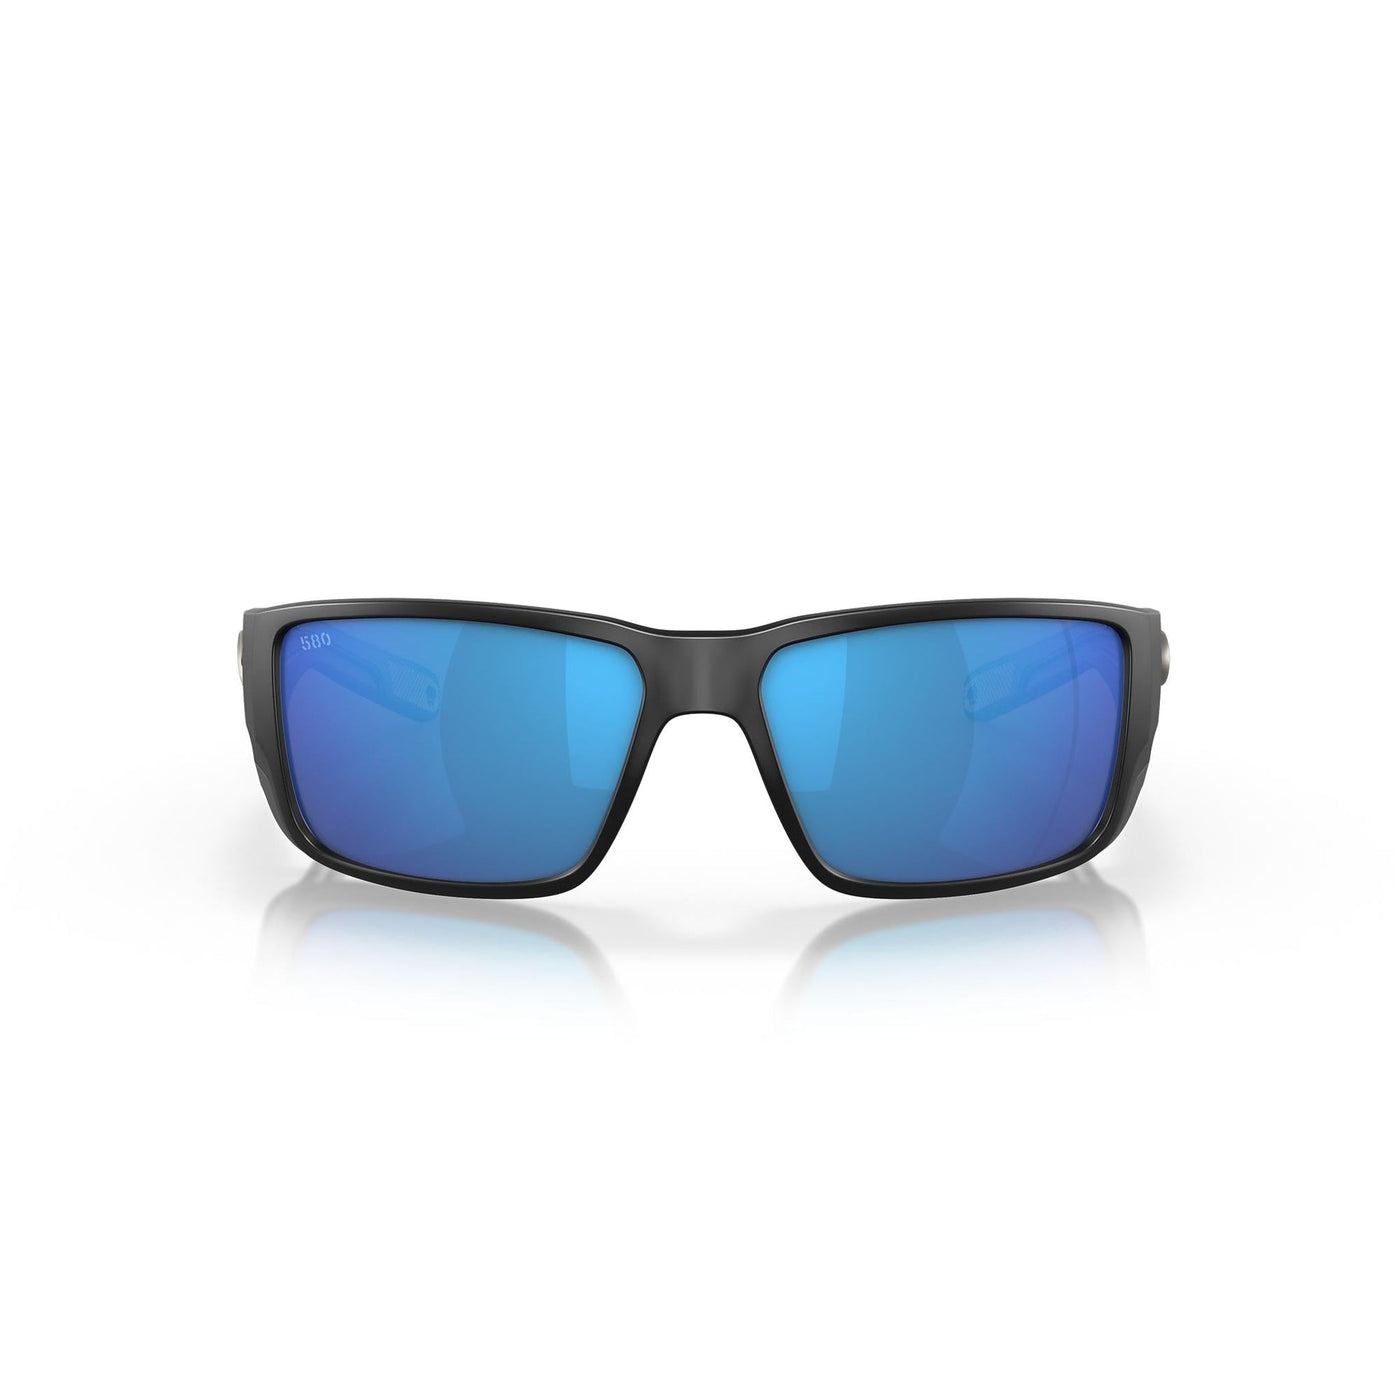 Costa Blackfin-Sunglasses-Topline Eyewear